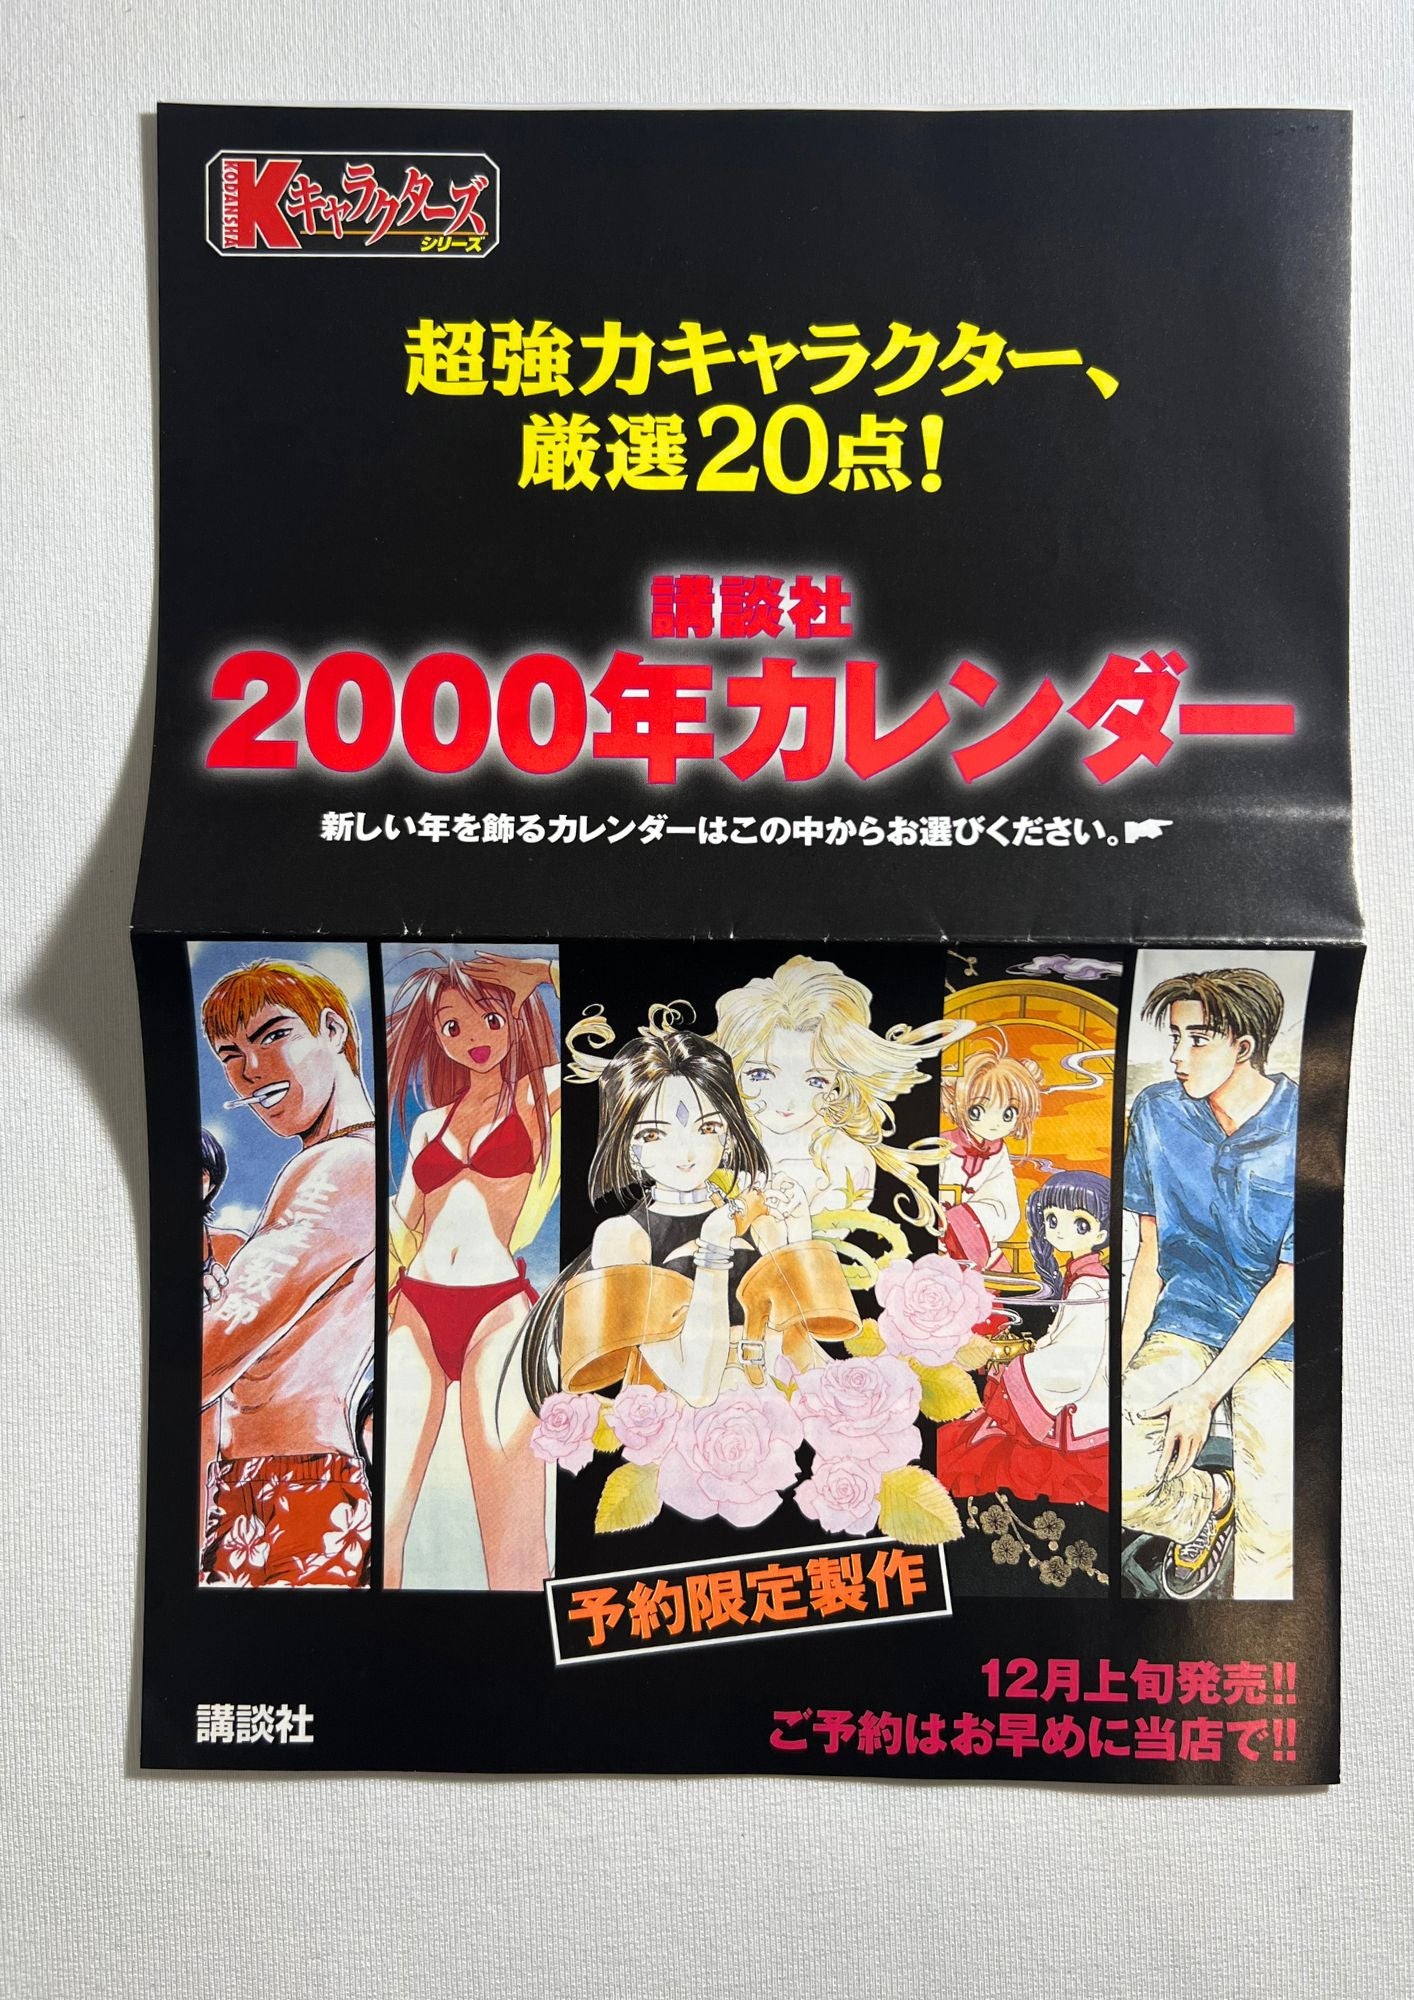 1999 Vintage AKIRA Official Young Magazine Vol.6 Manga Cover T-shirt / 1993 AKIRA Japanese Manga Vol. 6 1st Printing Issued Set